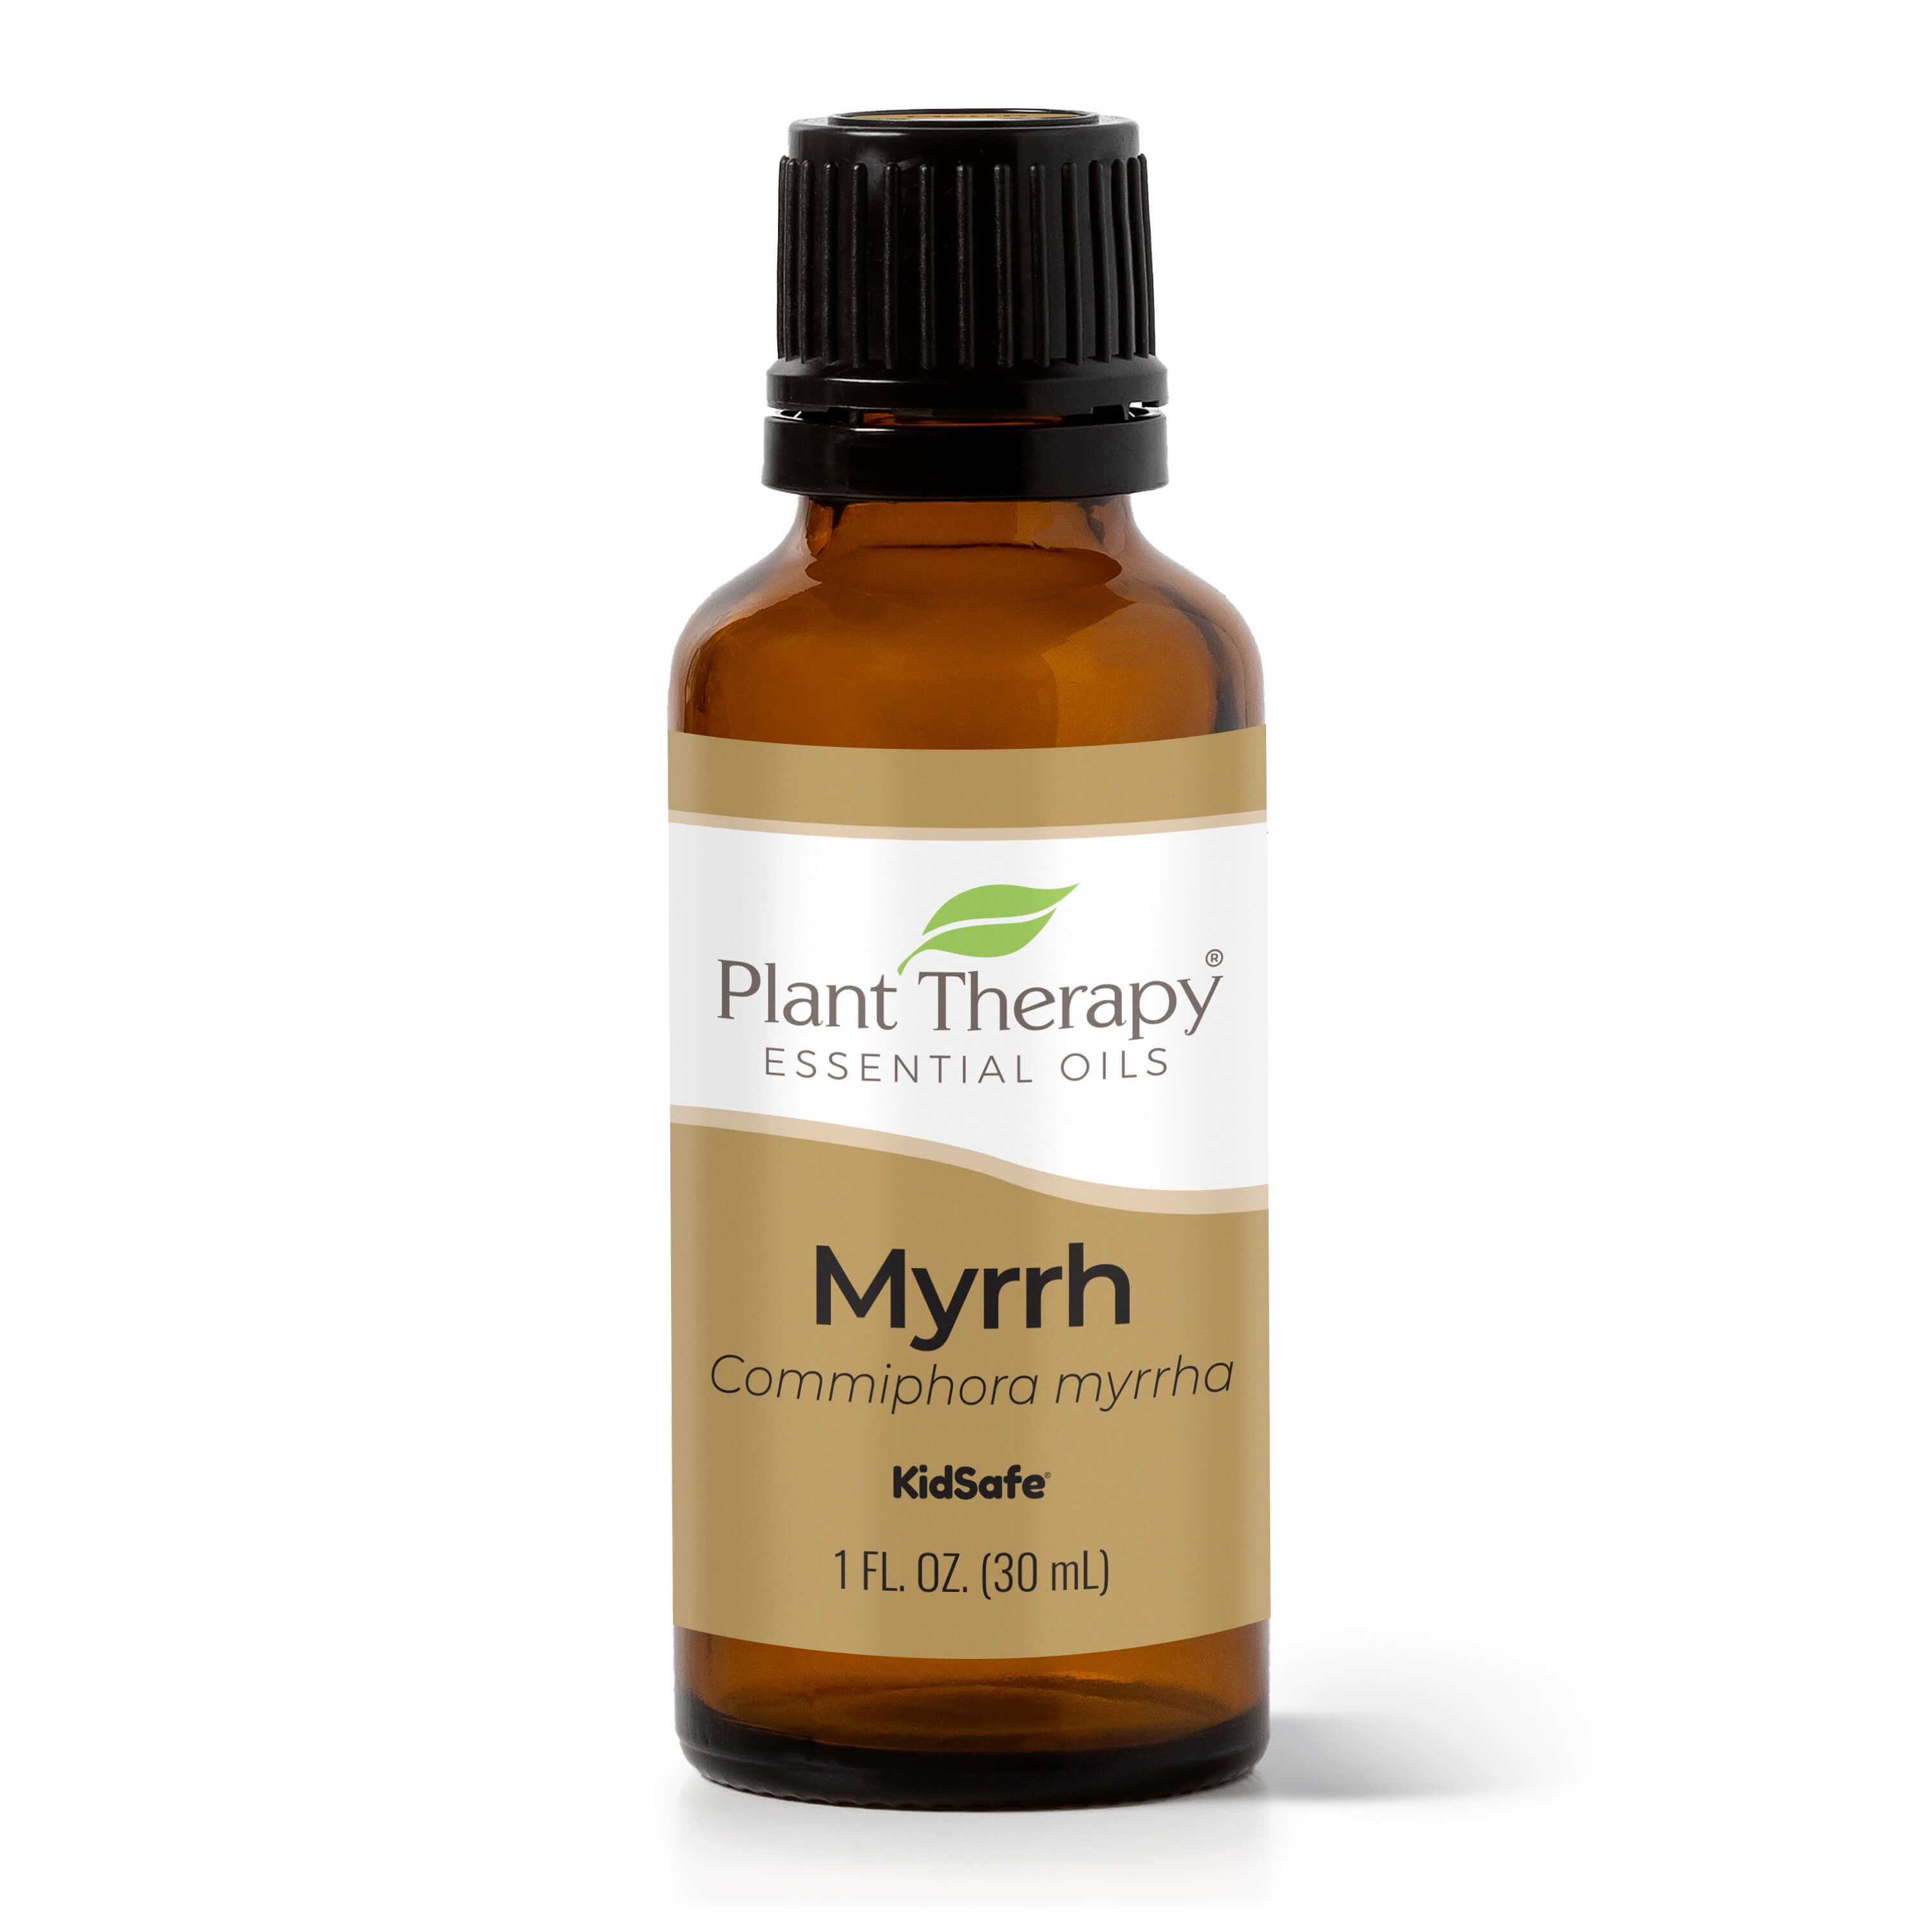 Myrrh Essential Oil Pure and Therapeutic - Get Natural Essential Oils